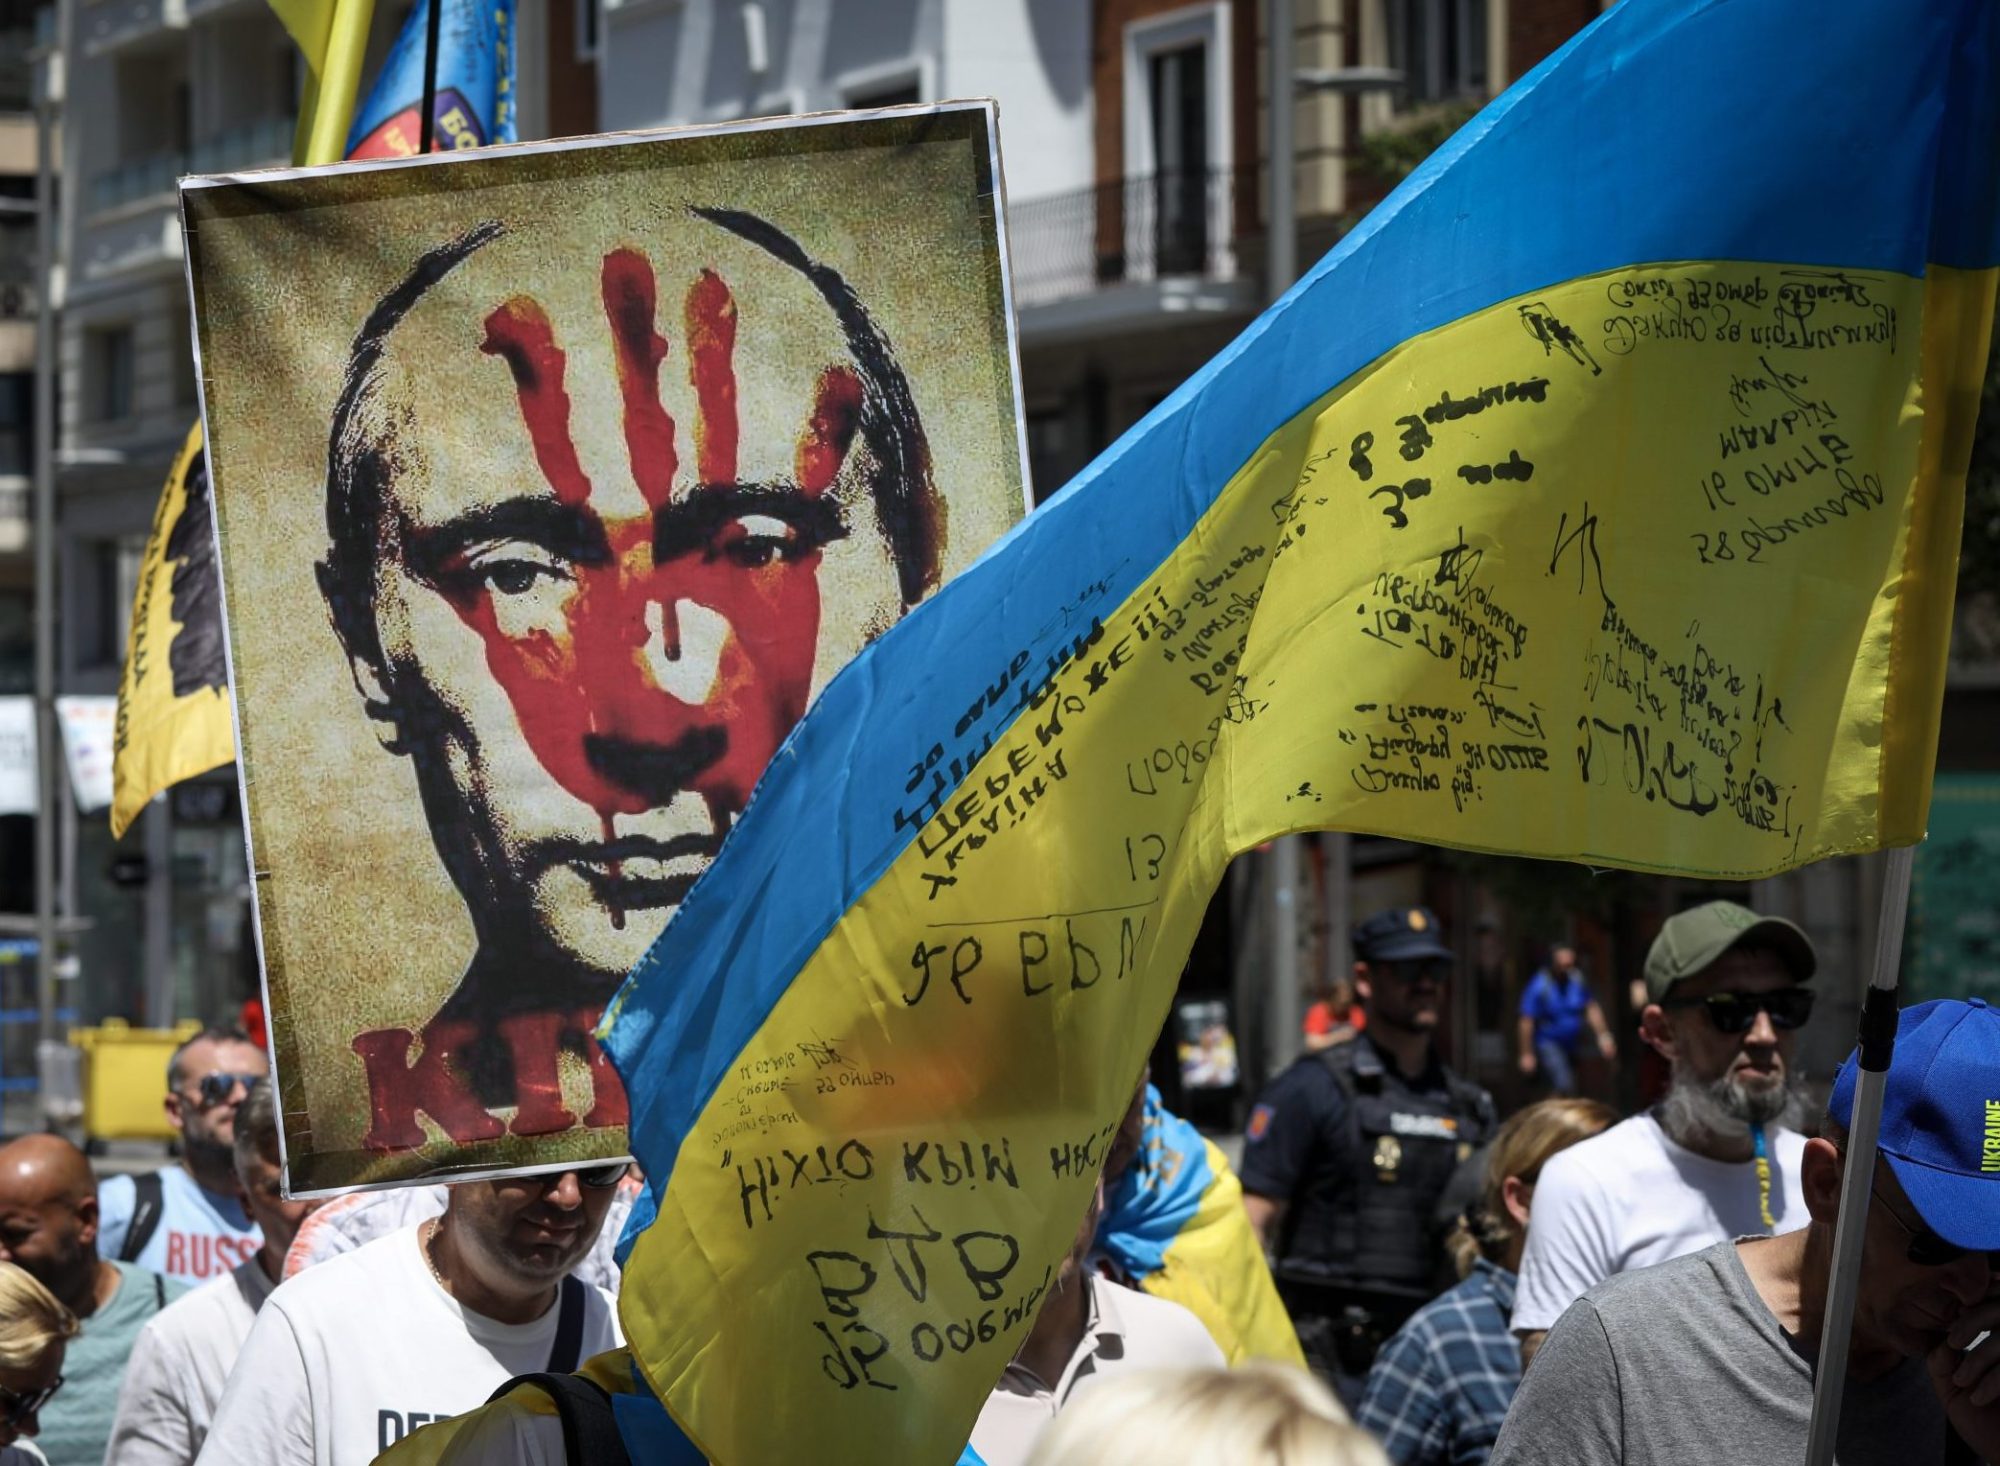 Blundering Into Escalation in Ukraine?